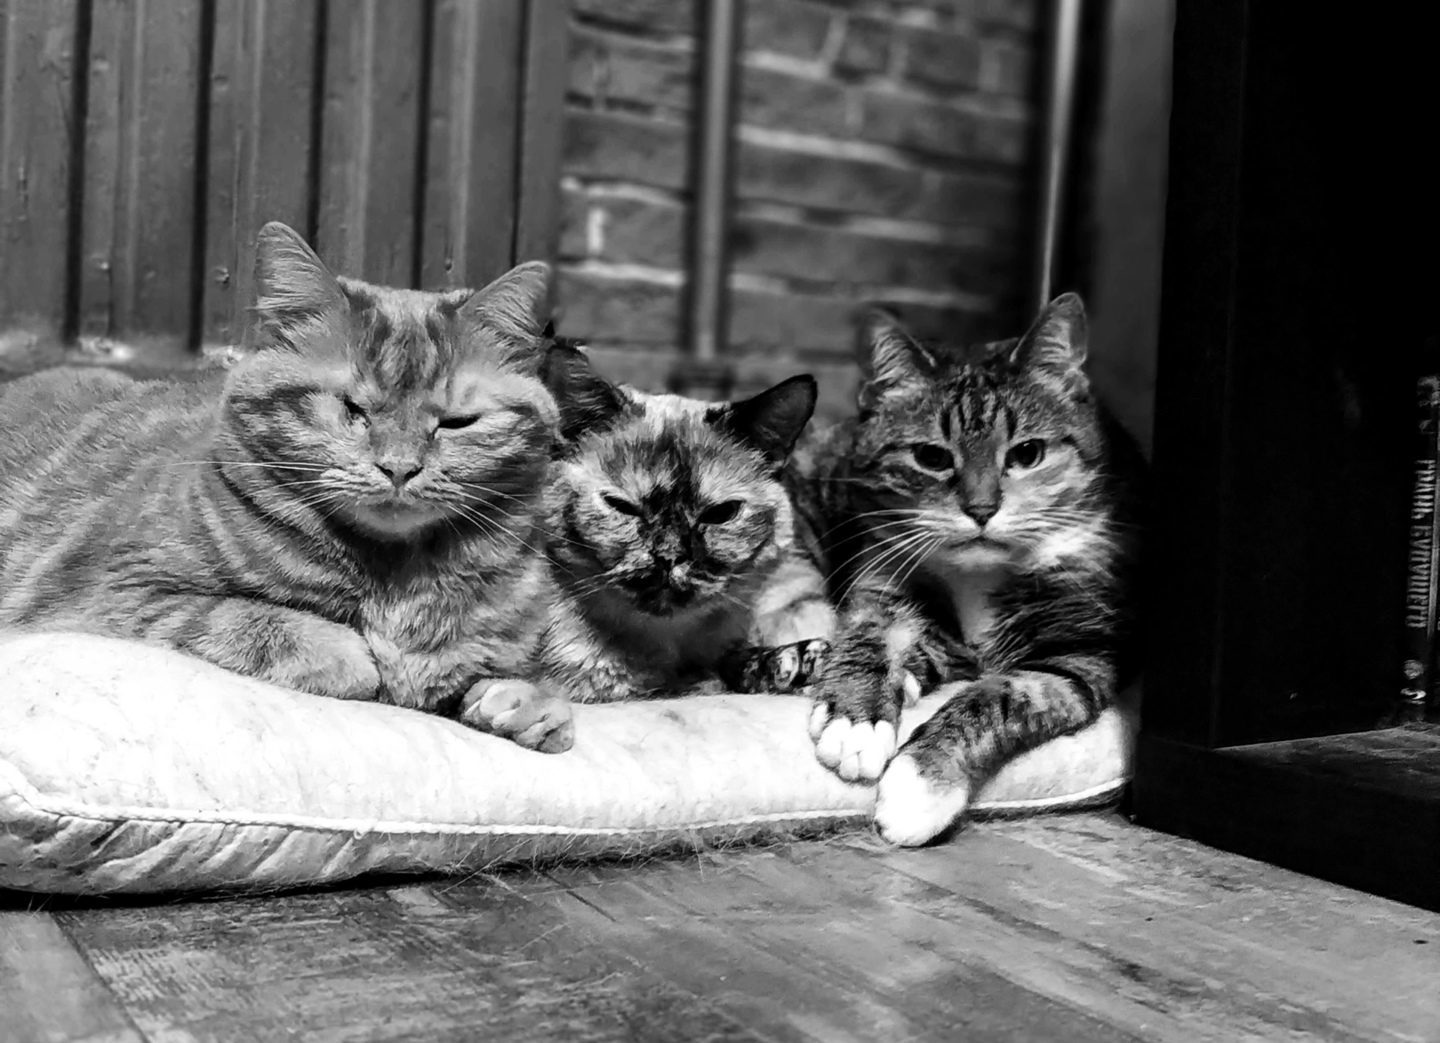 Напротив каждой кошки по три кошки. 3 Кошки. Три кошки фото. Картинки 3 котов. Три кошки Манхэттен.